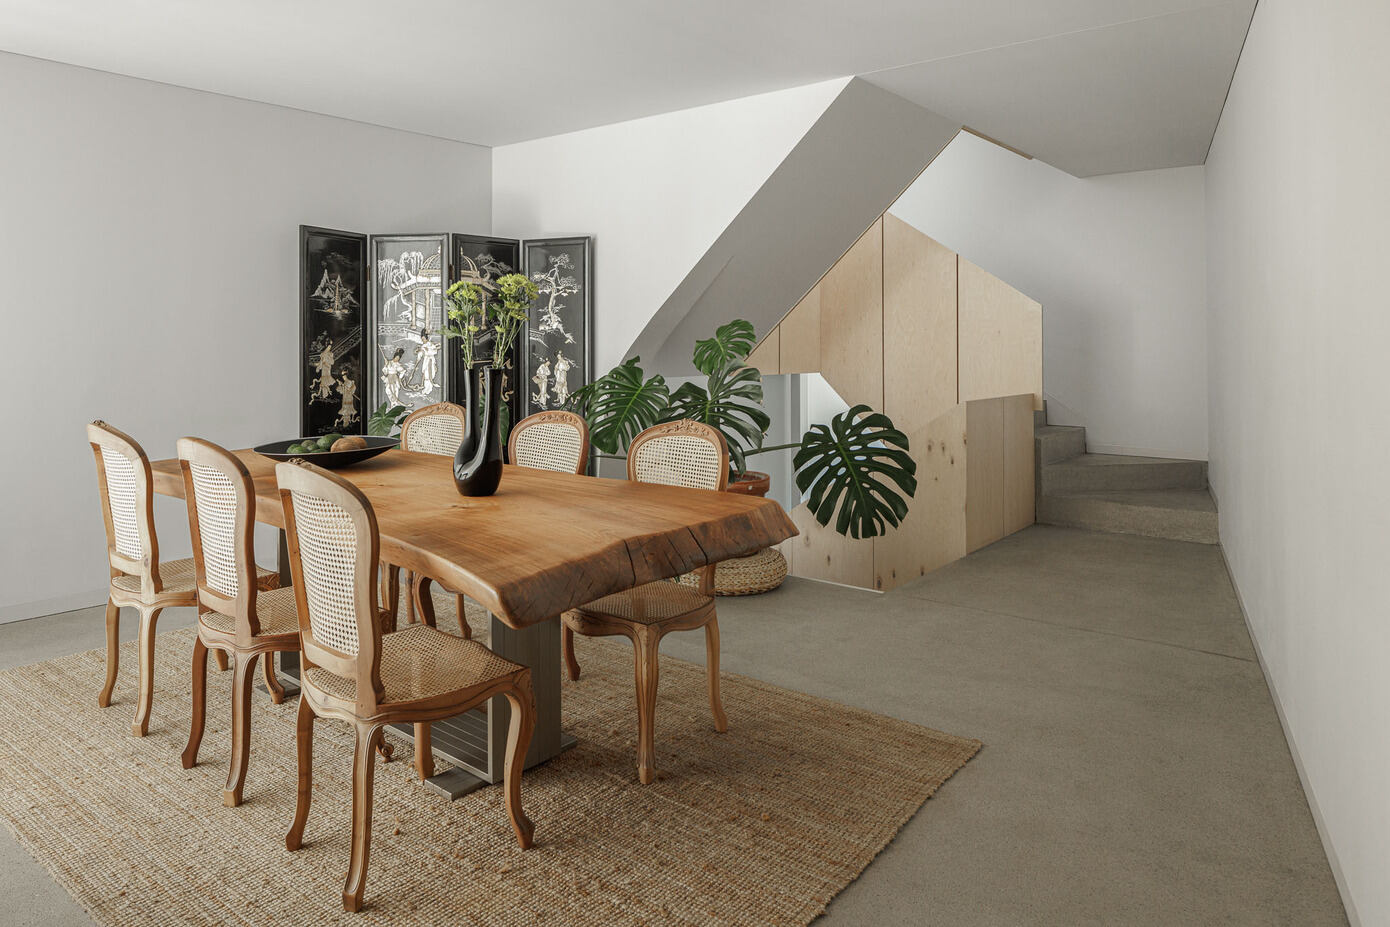 Casa Vertical: Vertical Living Redefined by Tsou Arquitectos